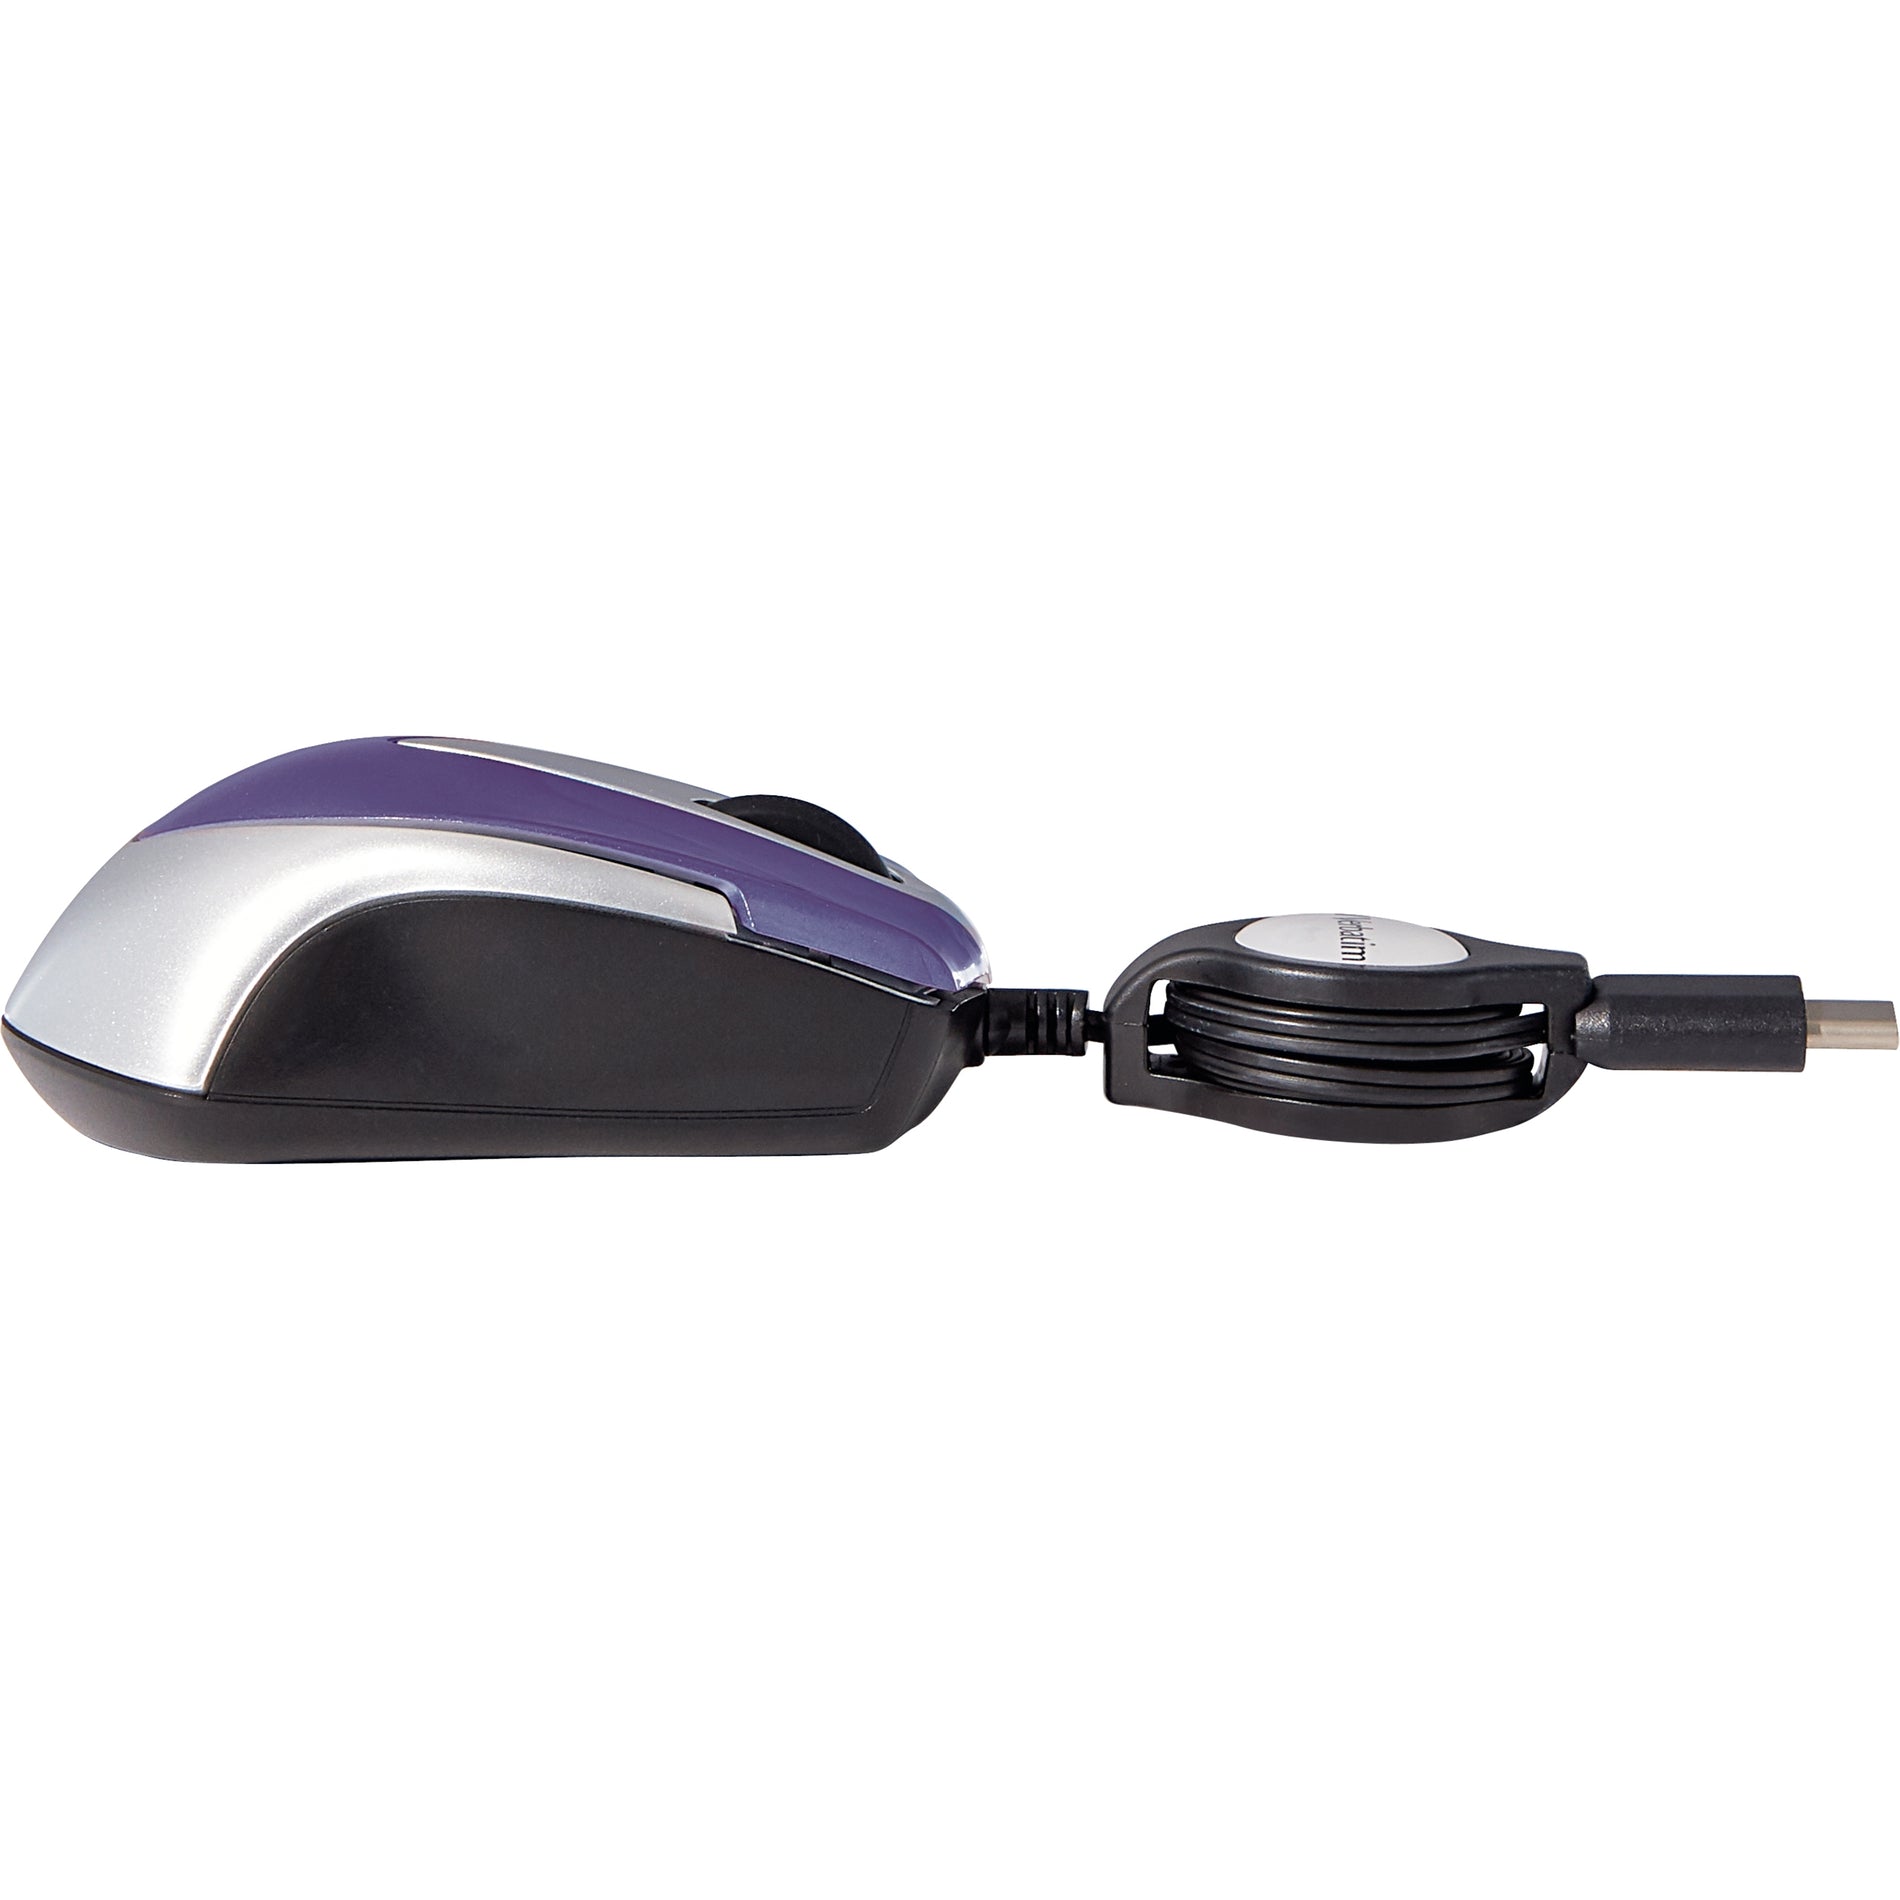 Verbatim 70238 USB-C Mini Optical Travel Mouse-Purple, 3 Buttons, Cable Connectivity